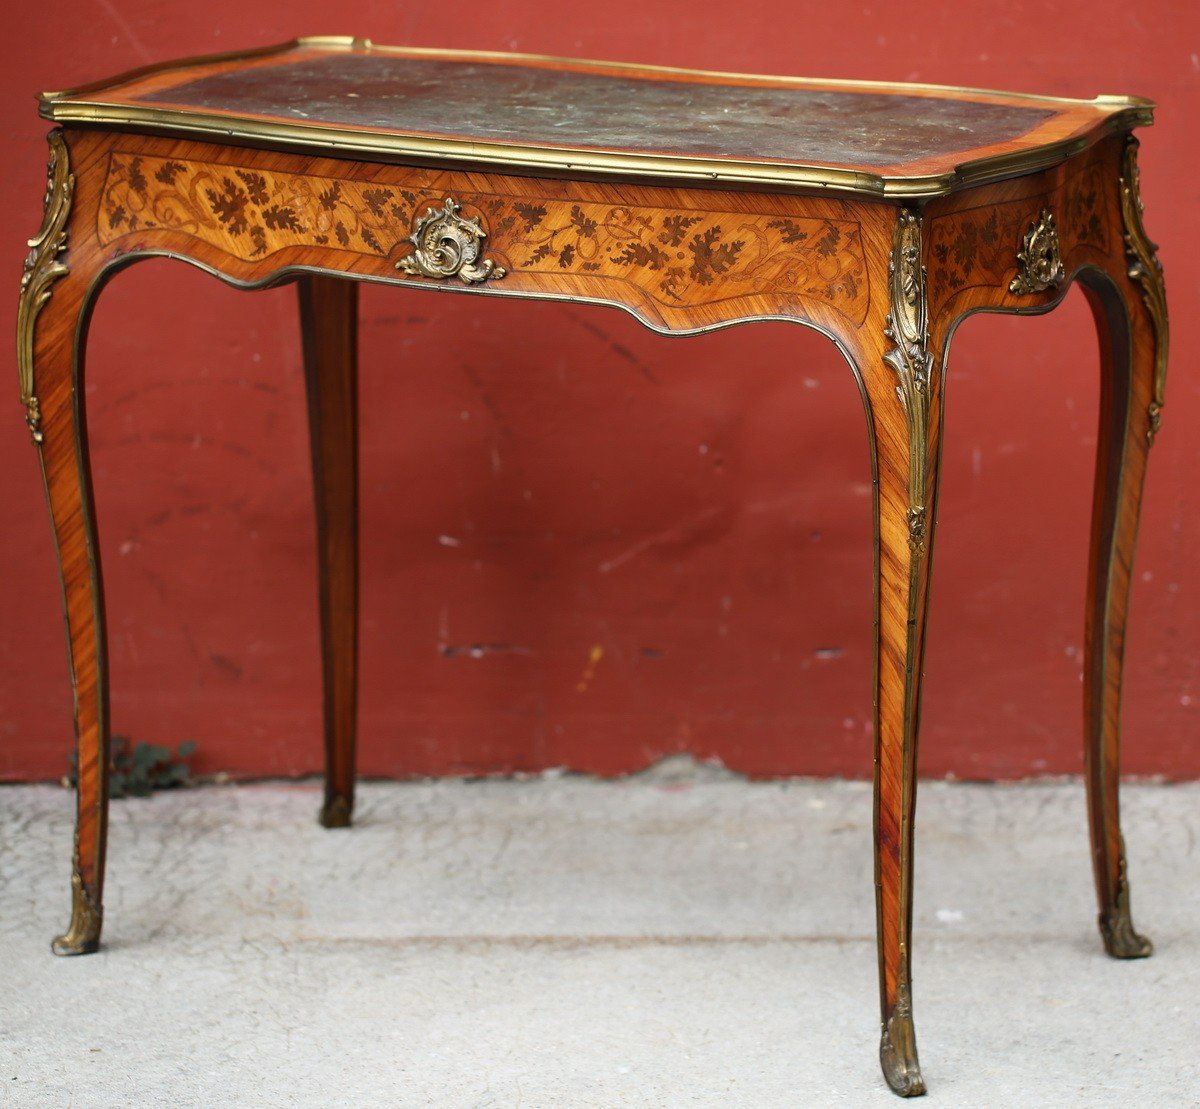 Vintage & Antique Tables for Sale on Proantic